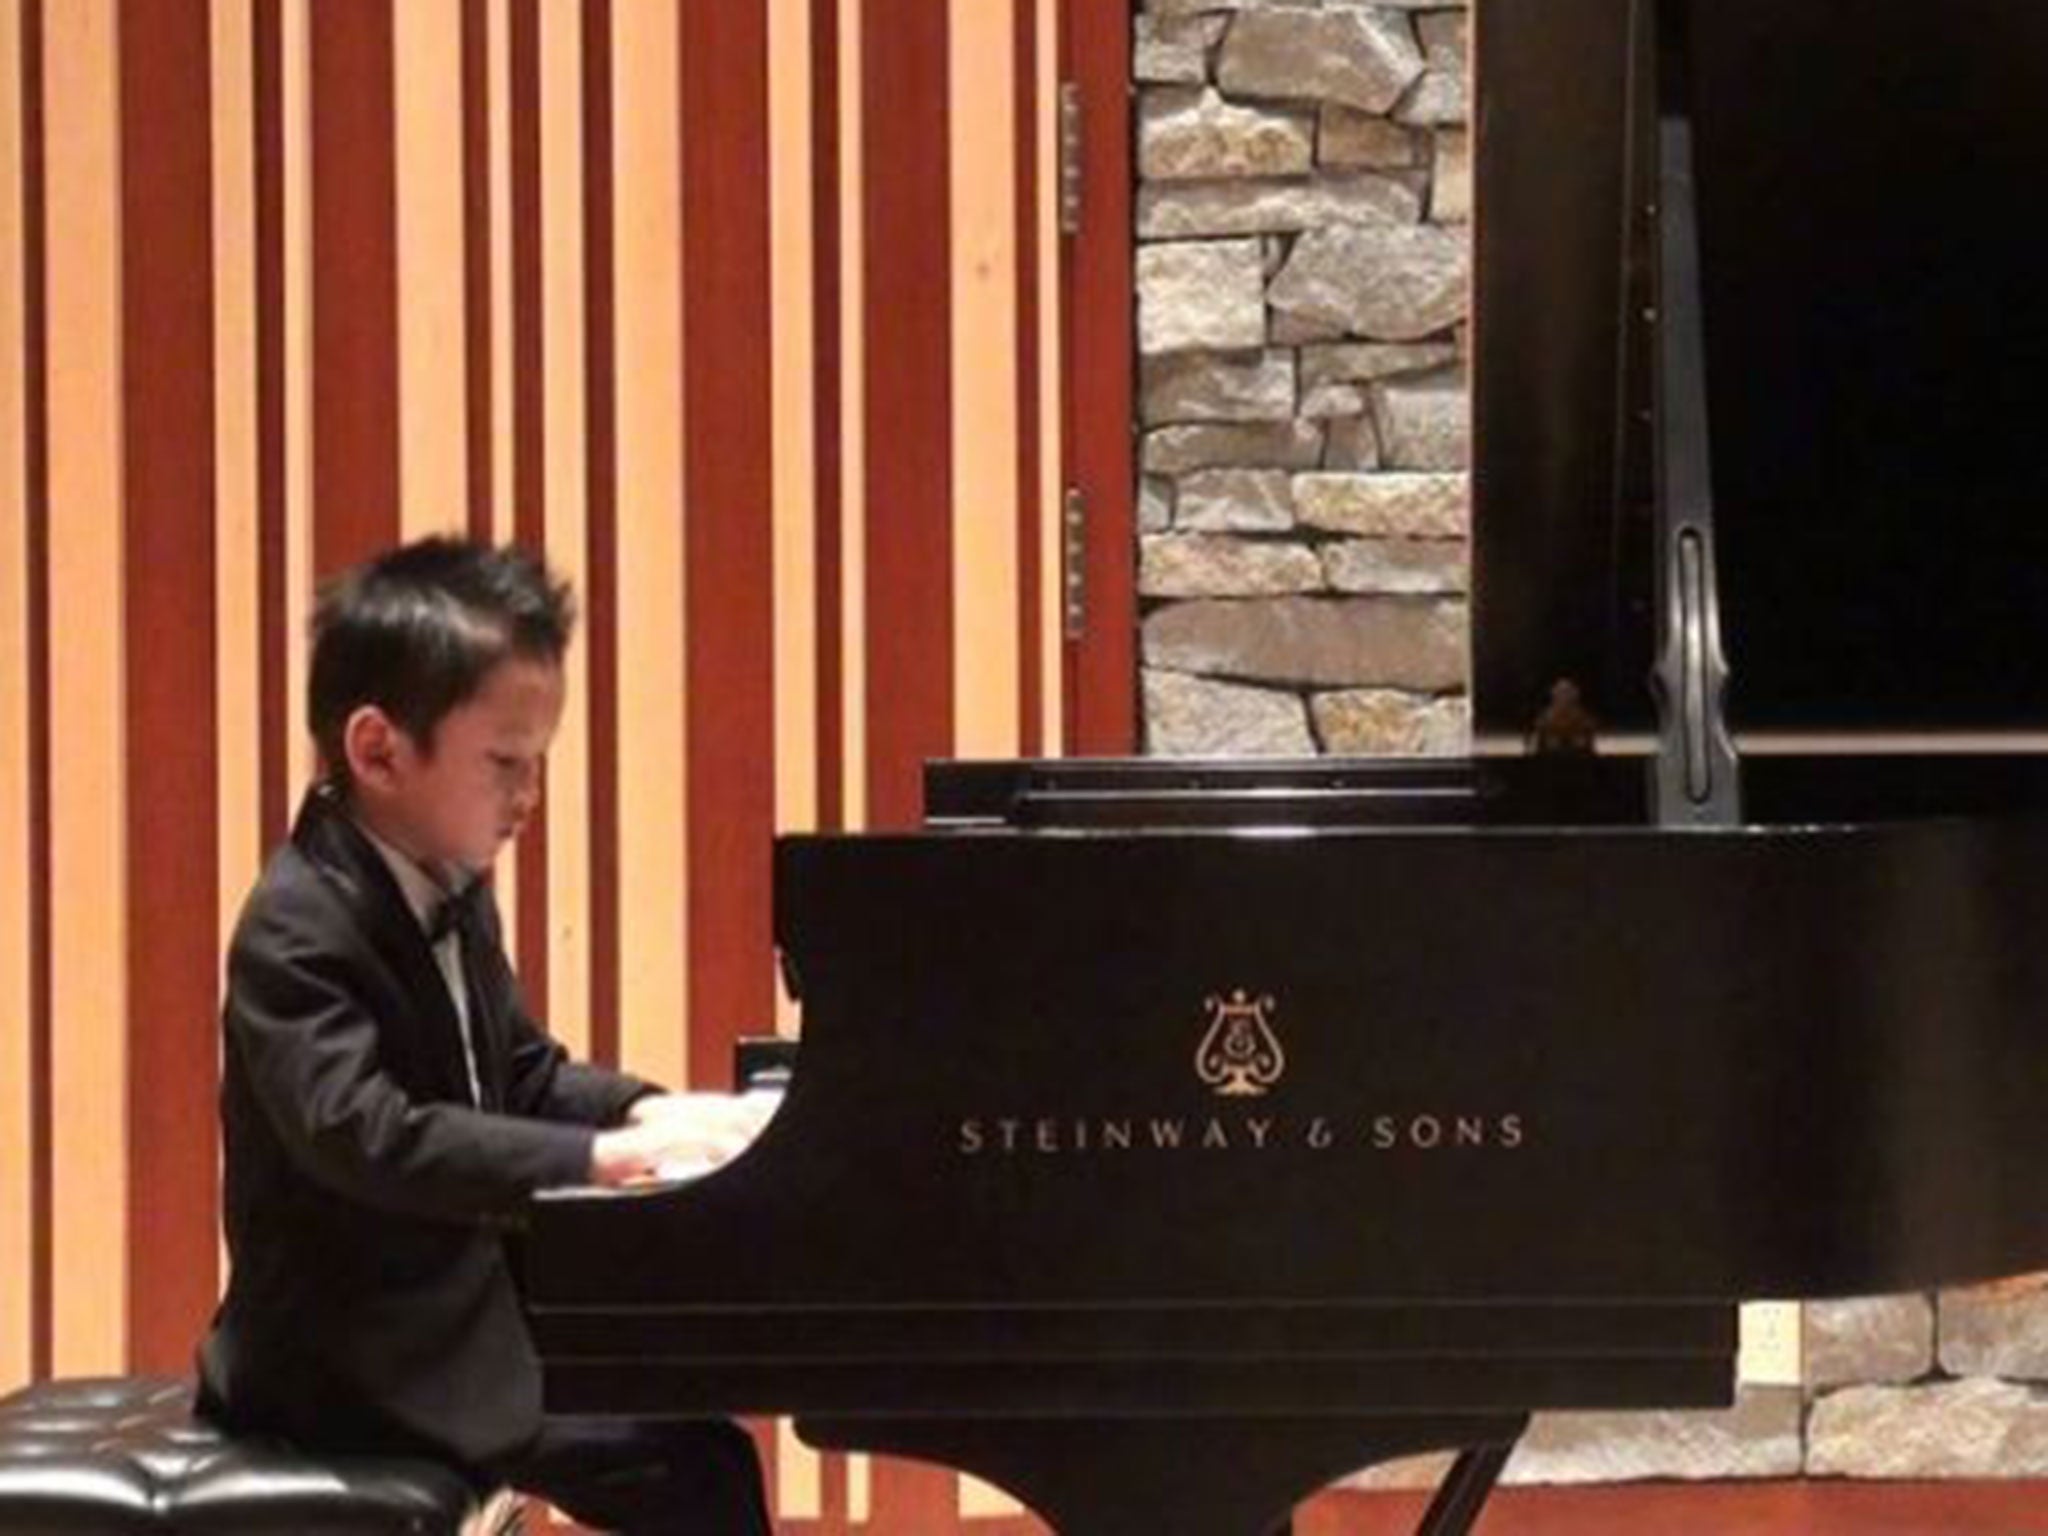 Five- year-old pianist Ryan Wang